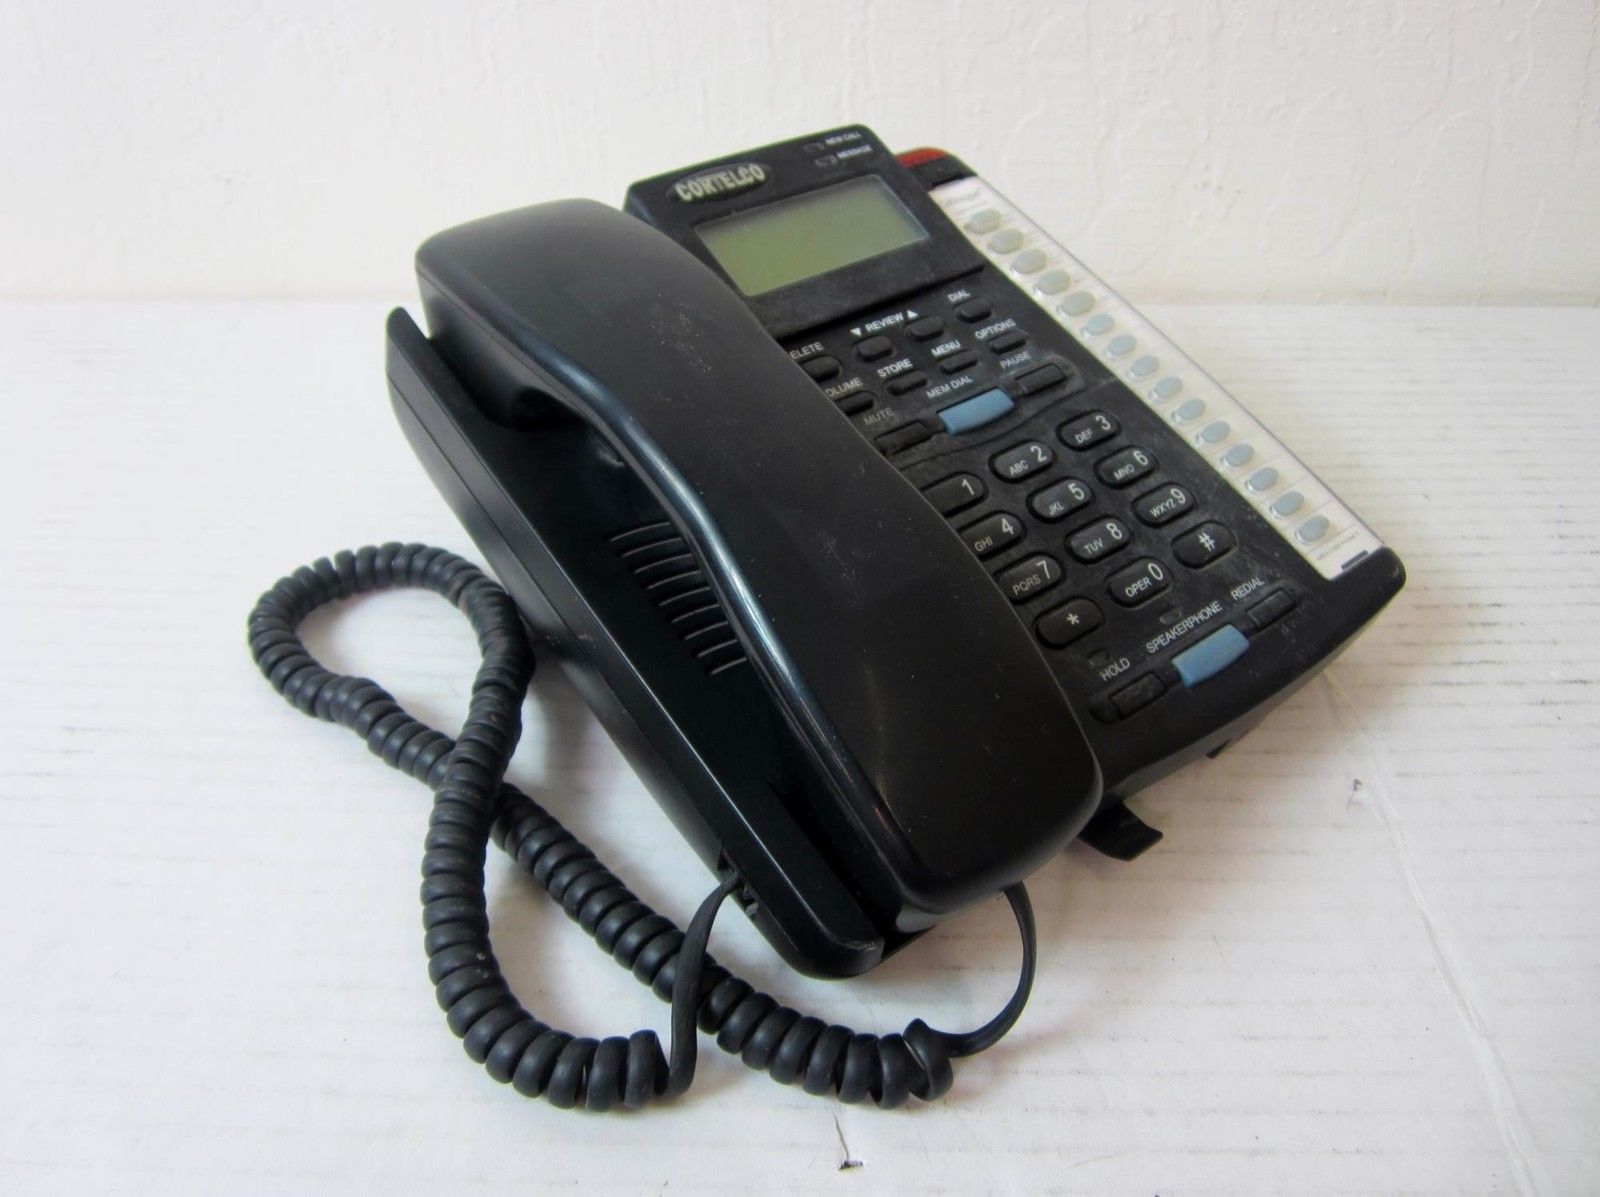 #2 CORTELCO 220000-TP2-27E SINGLE LINE TELEPHONE, 1-HANDSET LANDLINE PHONE - $19.60